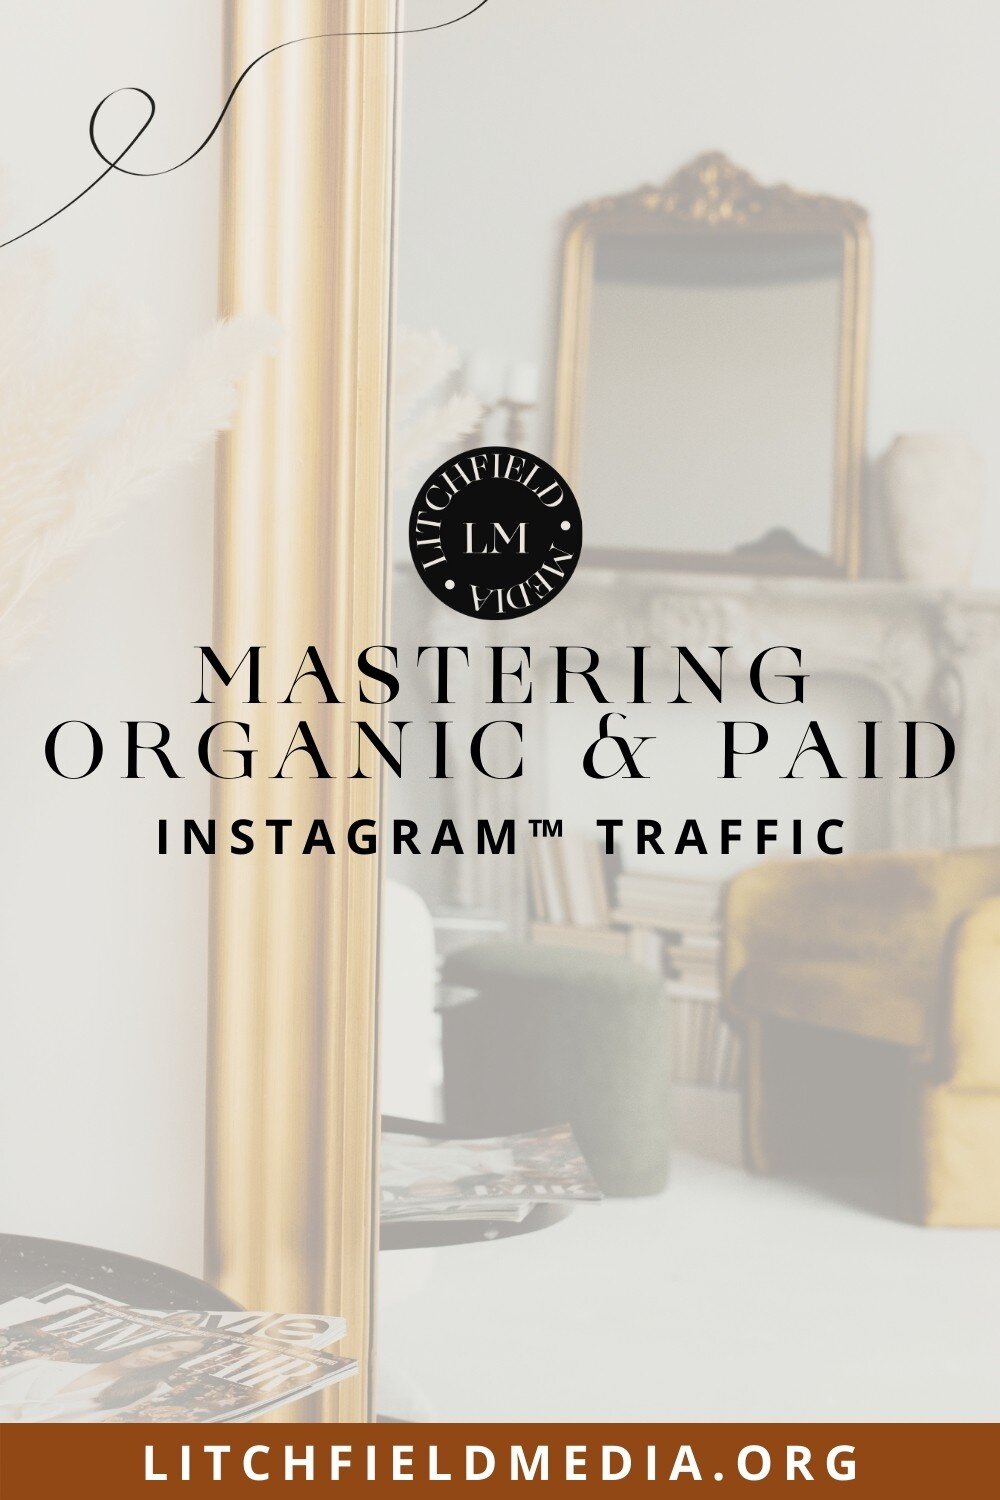 Litchfield Media Blog Mastering Organic and Paid Traffic on Instagram.jpg